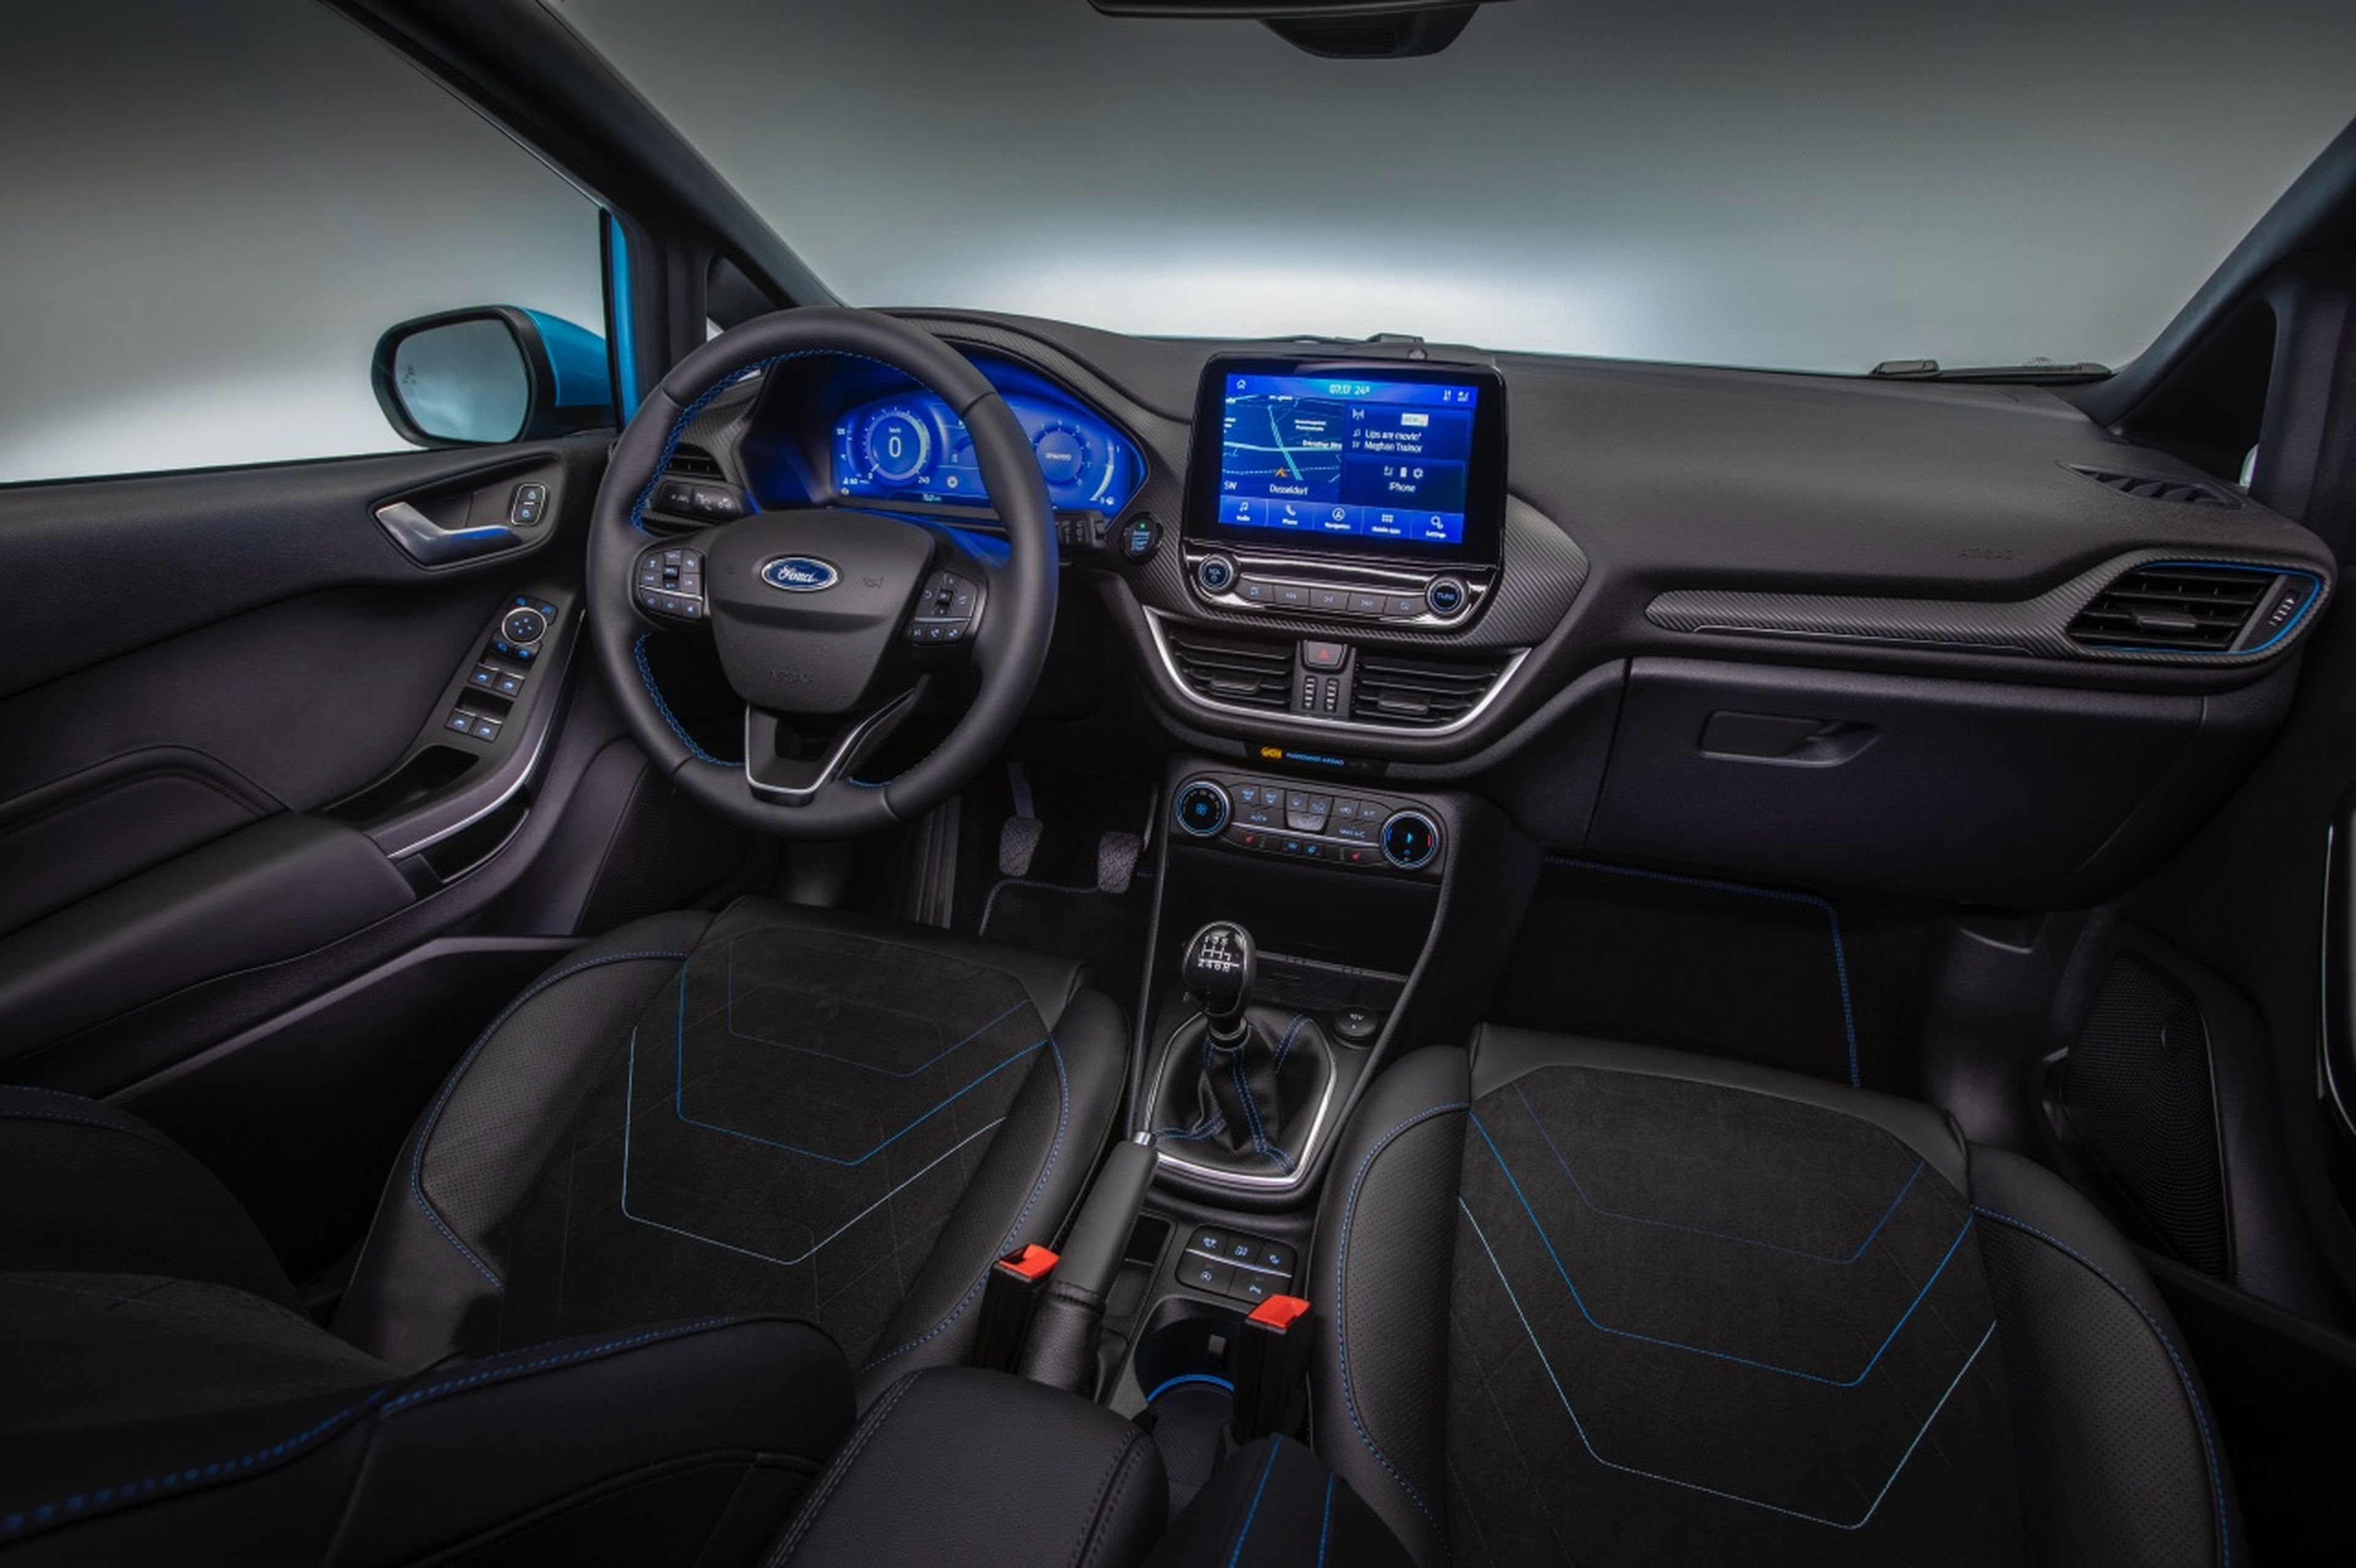 Ford Fiesta interior